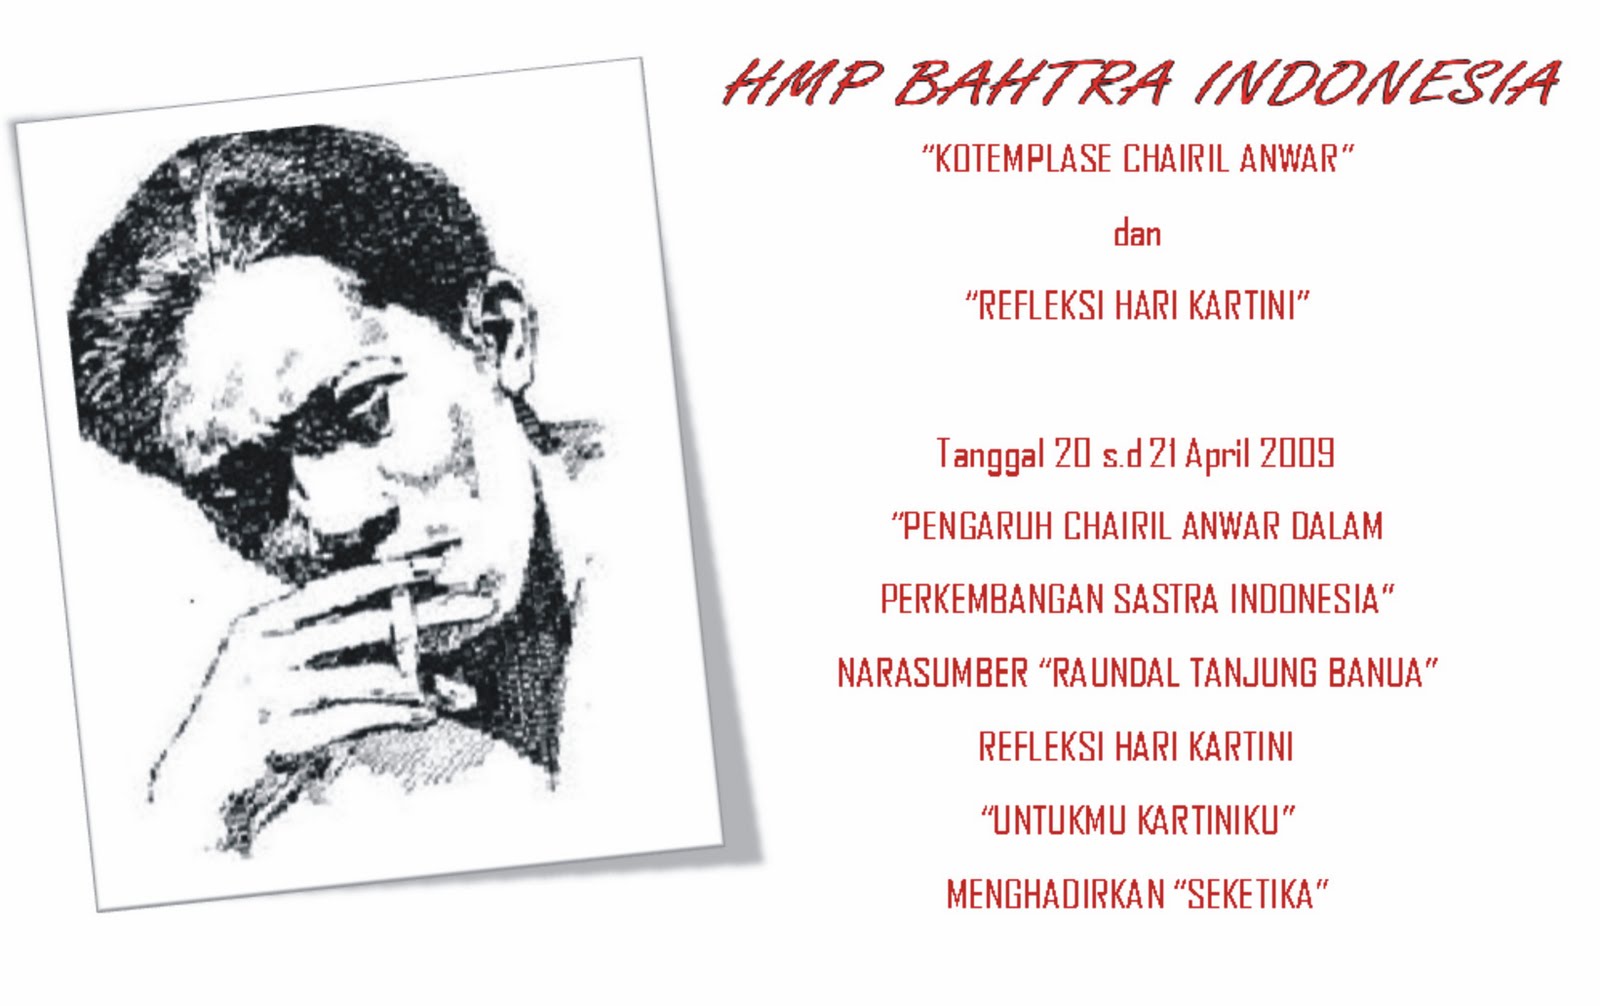 Bulan Chairil Anwar Hari Kartini 2009 HMP Bahtra 